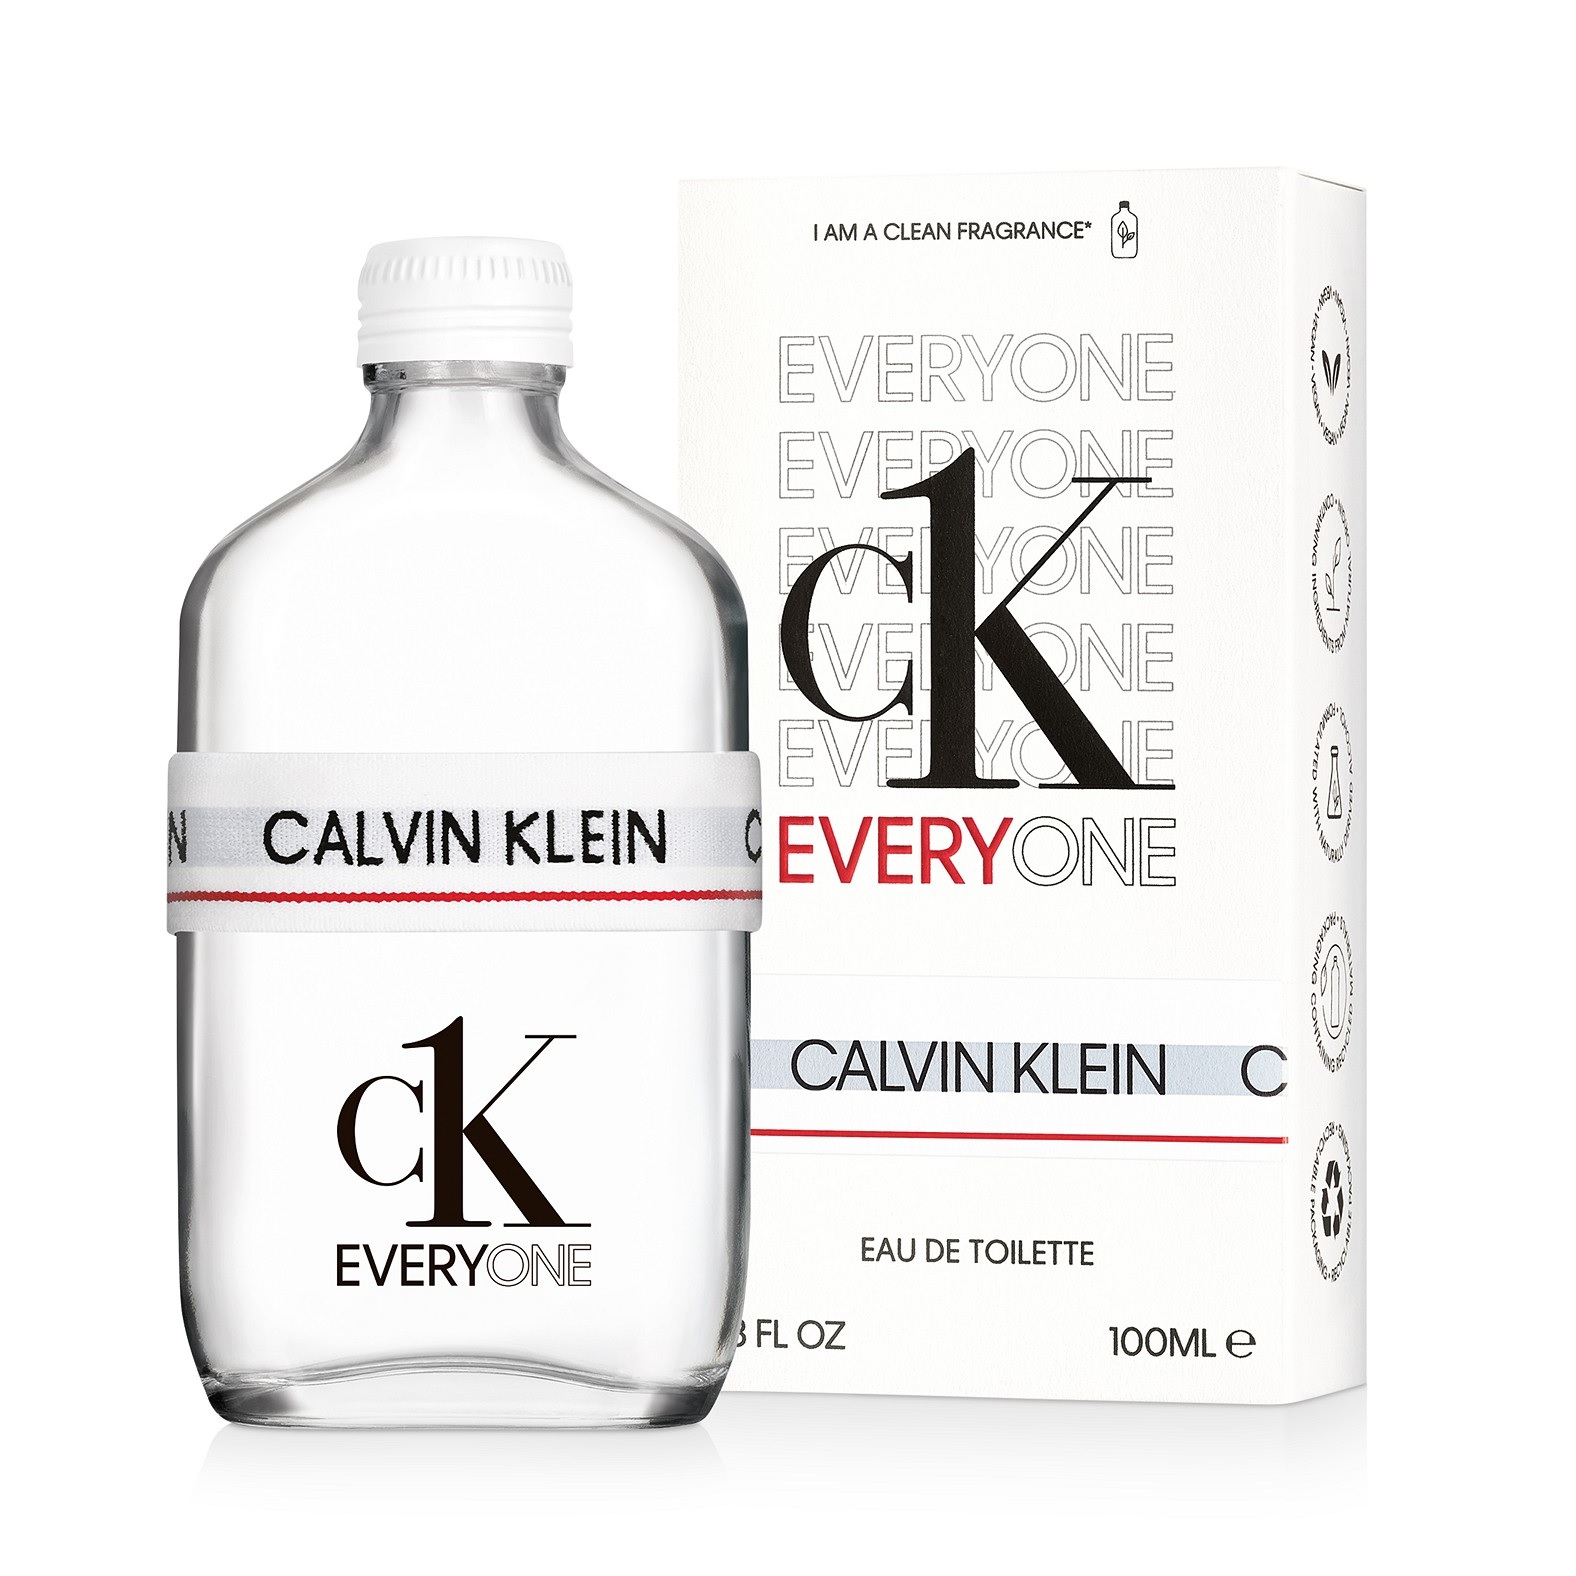 CK Everyone Calvin Klein perfume - a new fragrance for women and men 2020